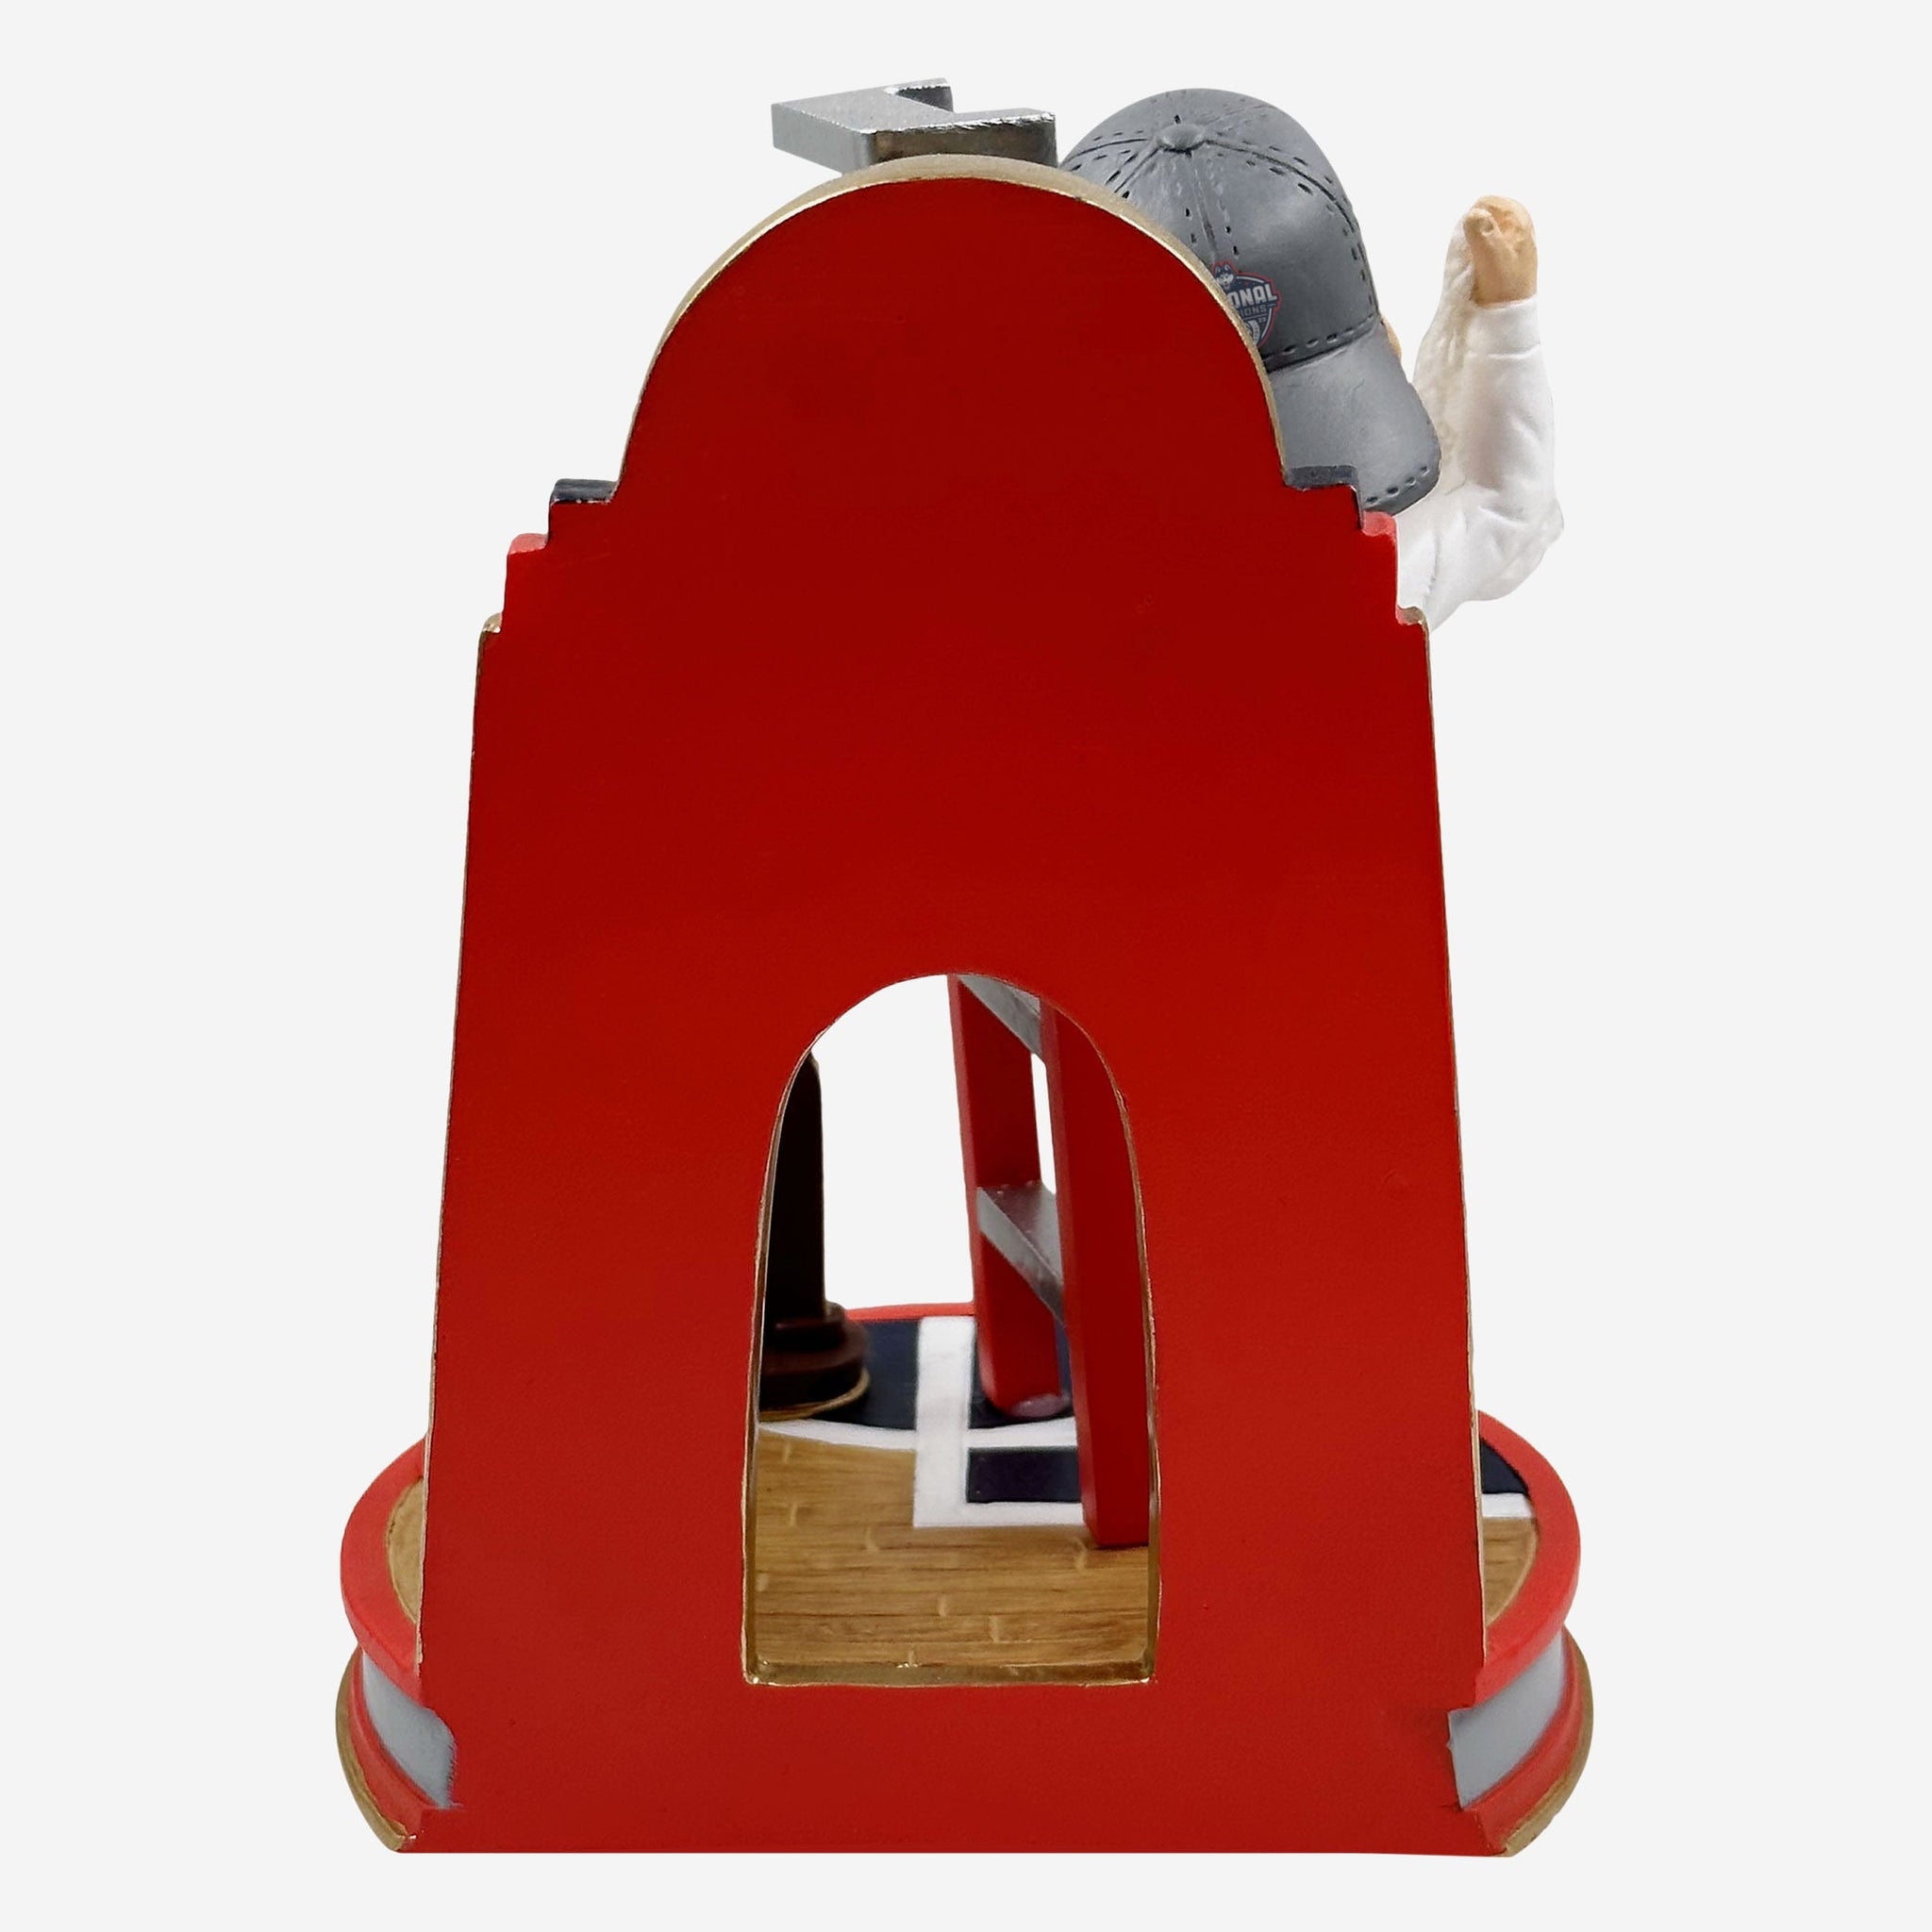 Champion Louisville Cardinals Arch Mascot Hoodie - Red